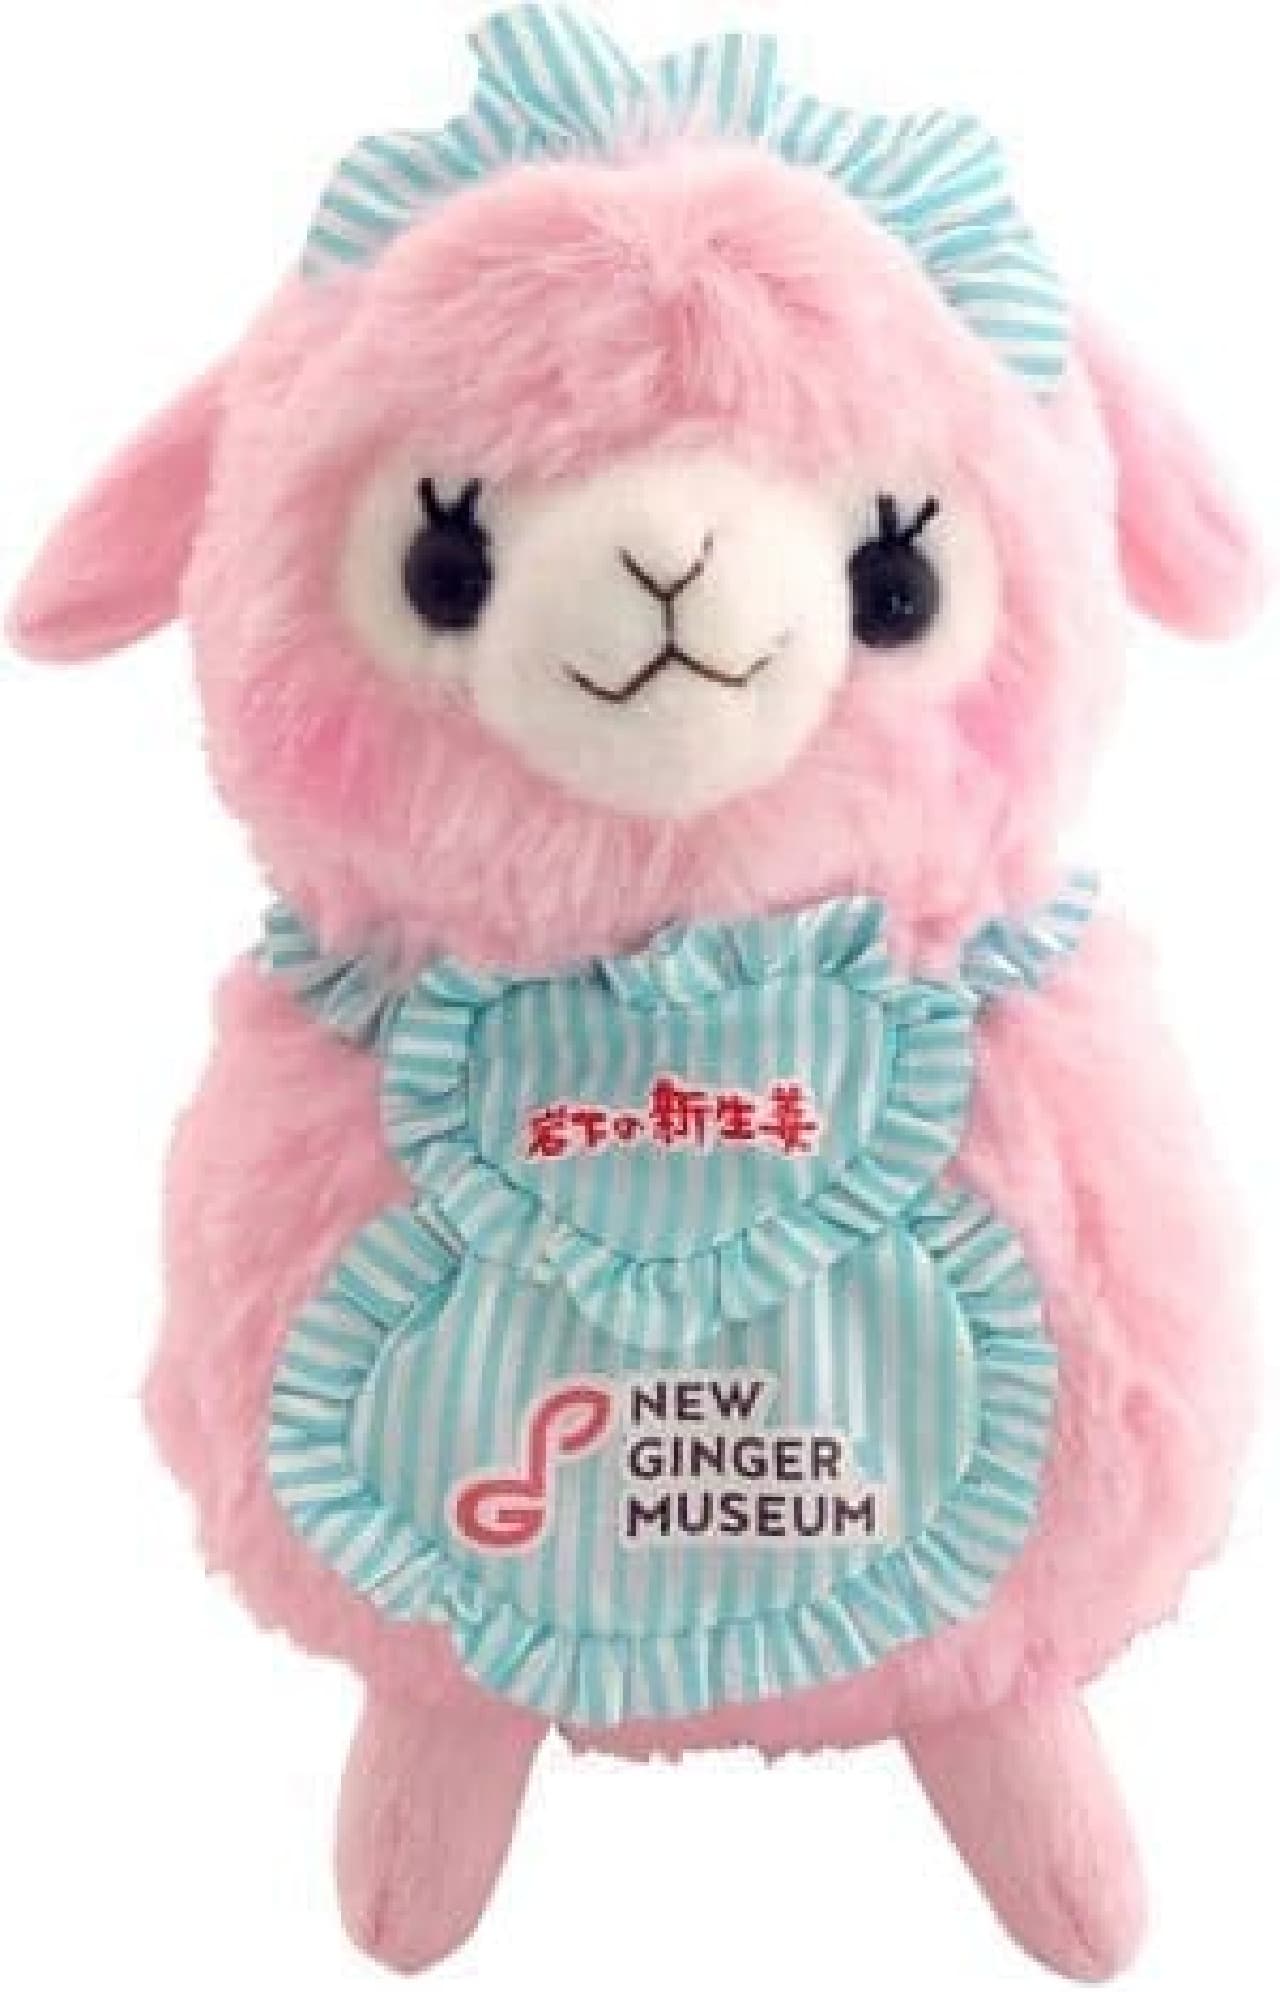 Plush toy of "Iwashita New Ginger Alpaca"